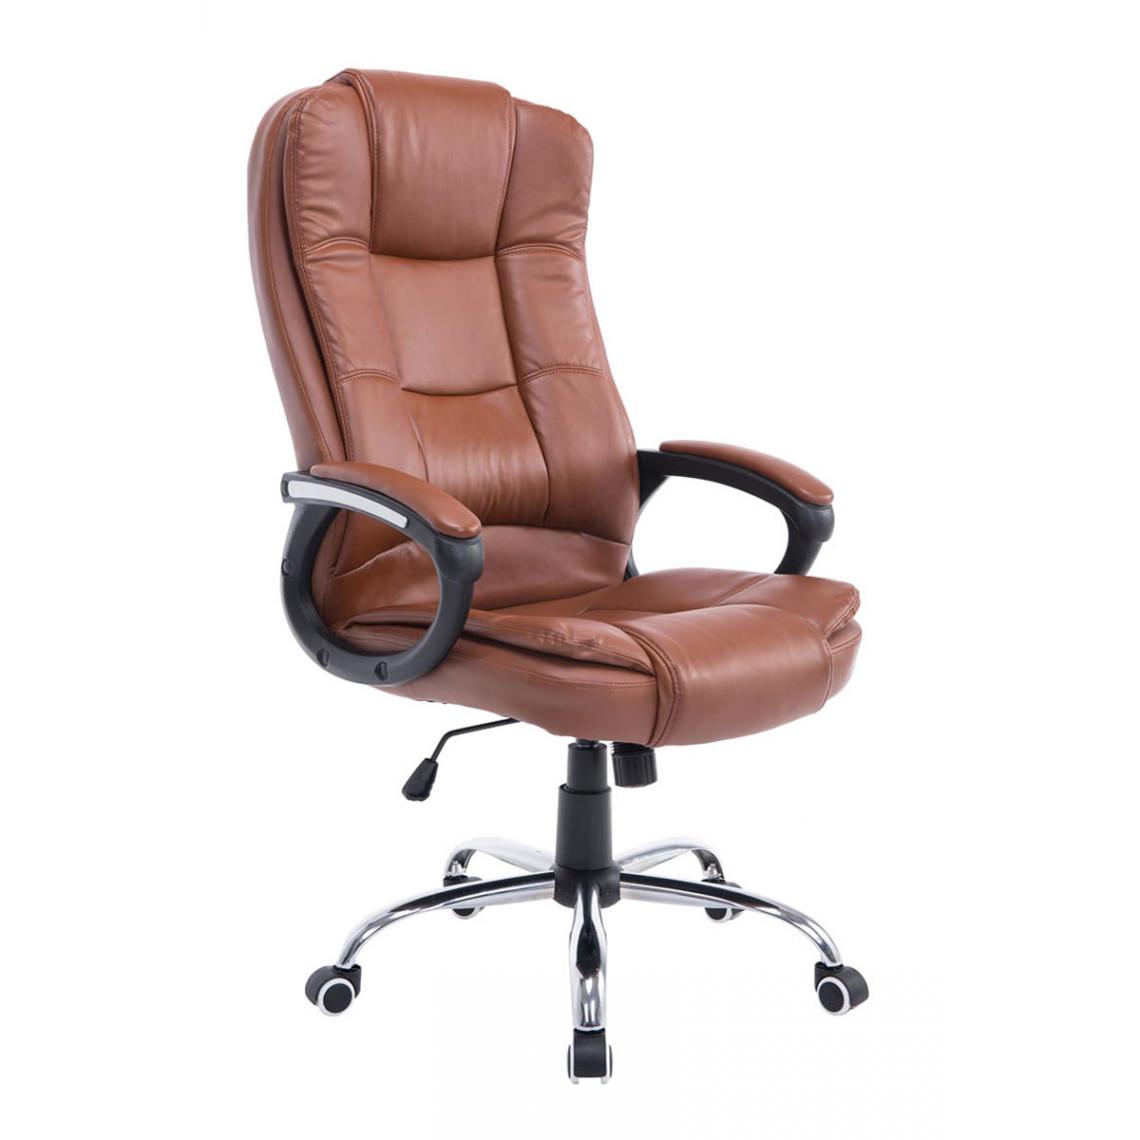 Icaverne - Moderne Chaise de bureau serie Freetown couleur brun clair - Chaises